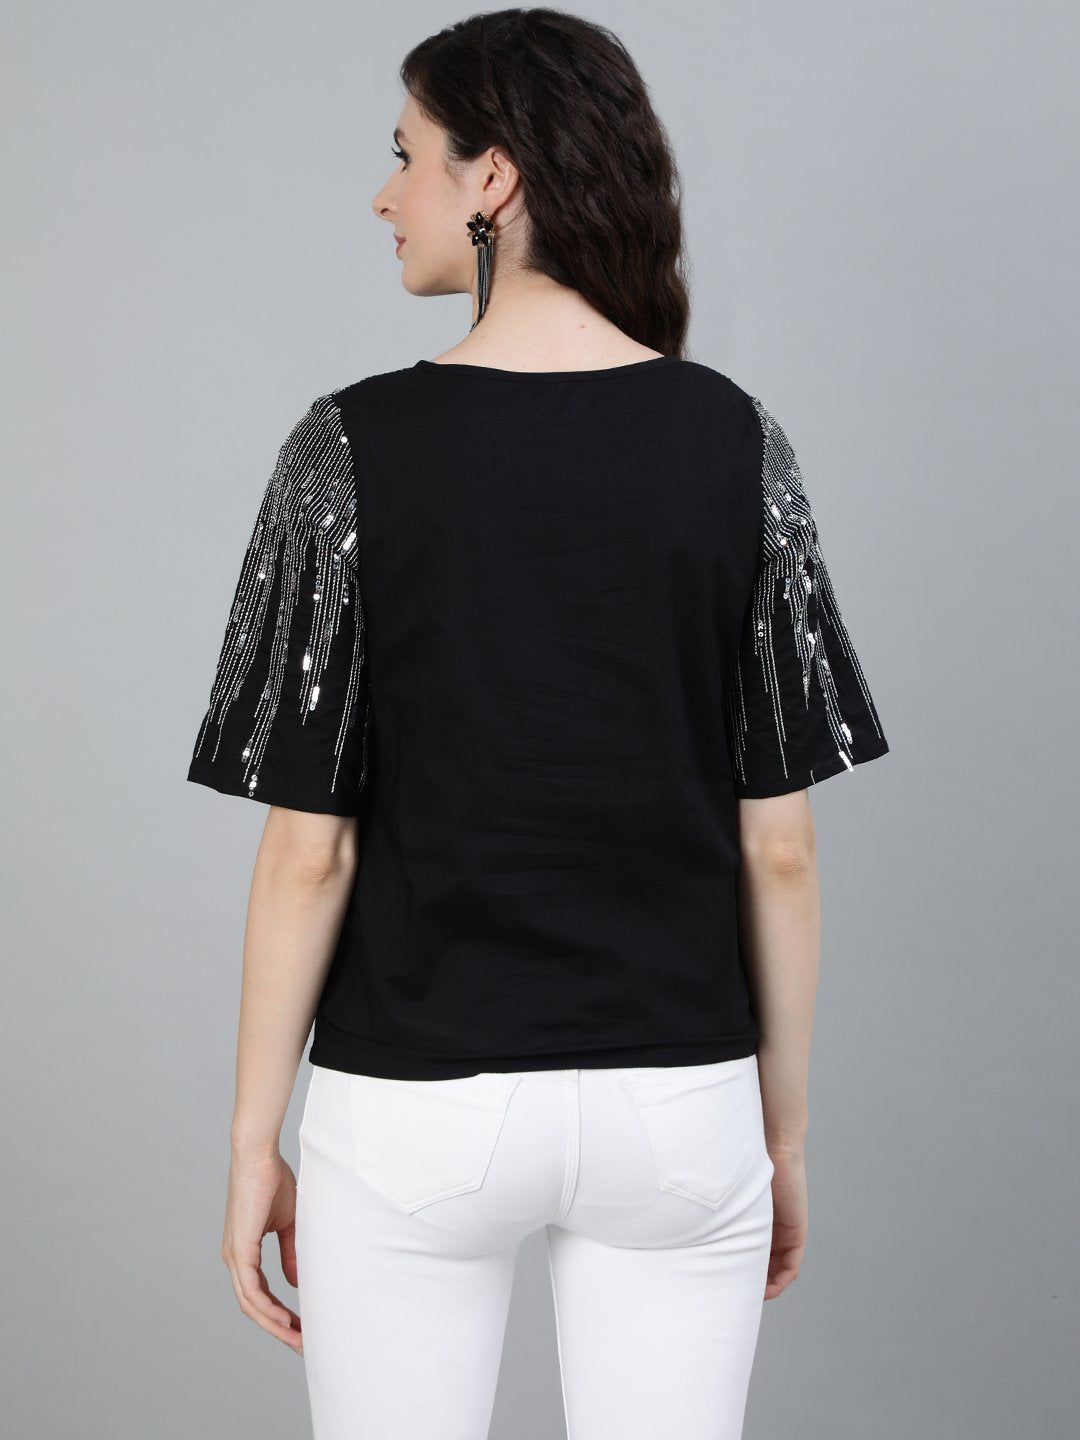 Ishin Women's Black Sequin Embroidered Top